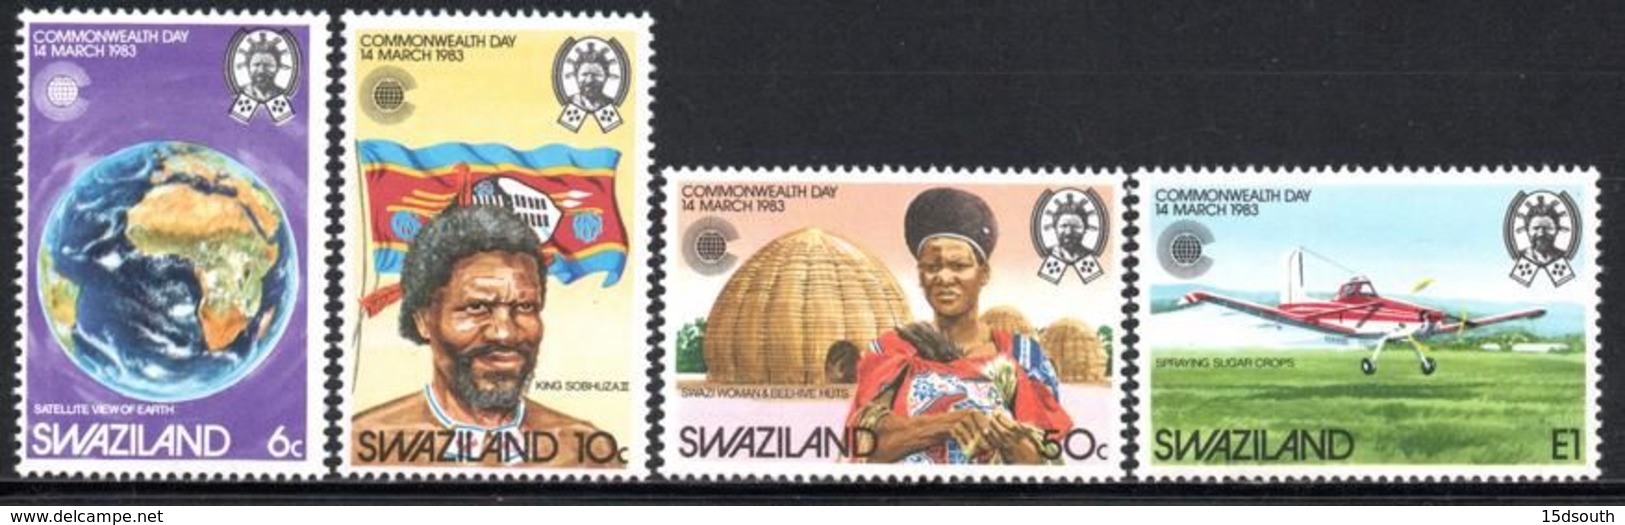 Swaziland - 1983 Commonwealth Day Set (**) # SG 421-424 - Swaziland (1968-...)